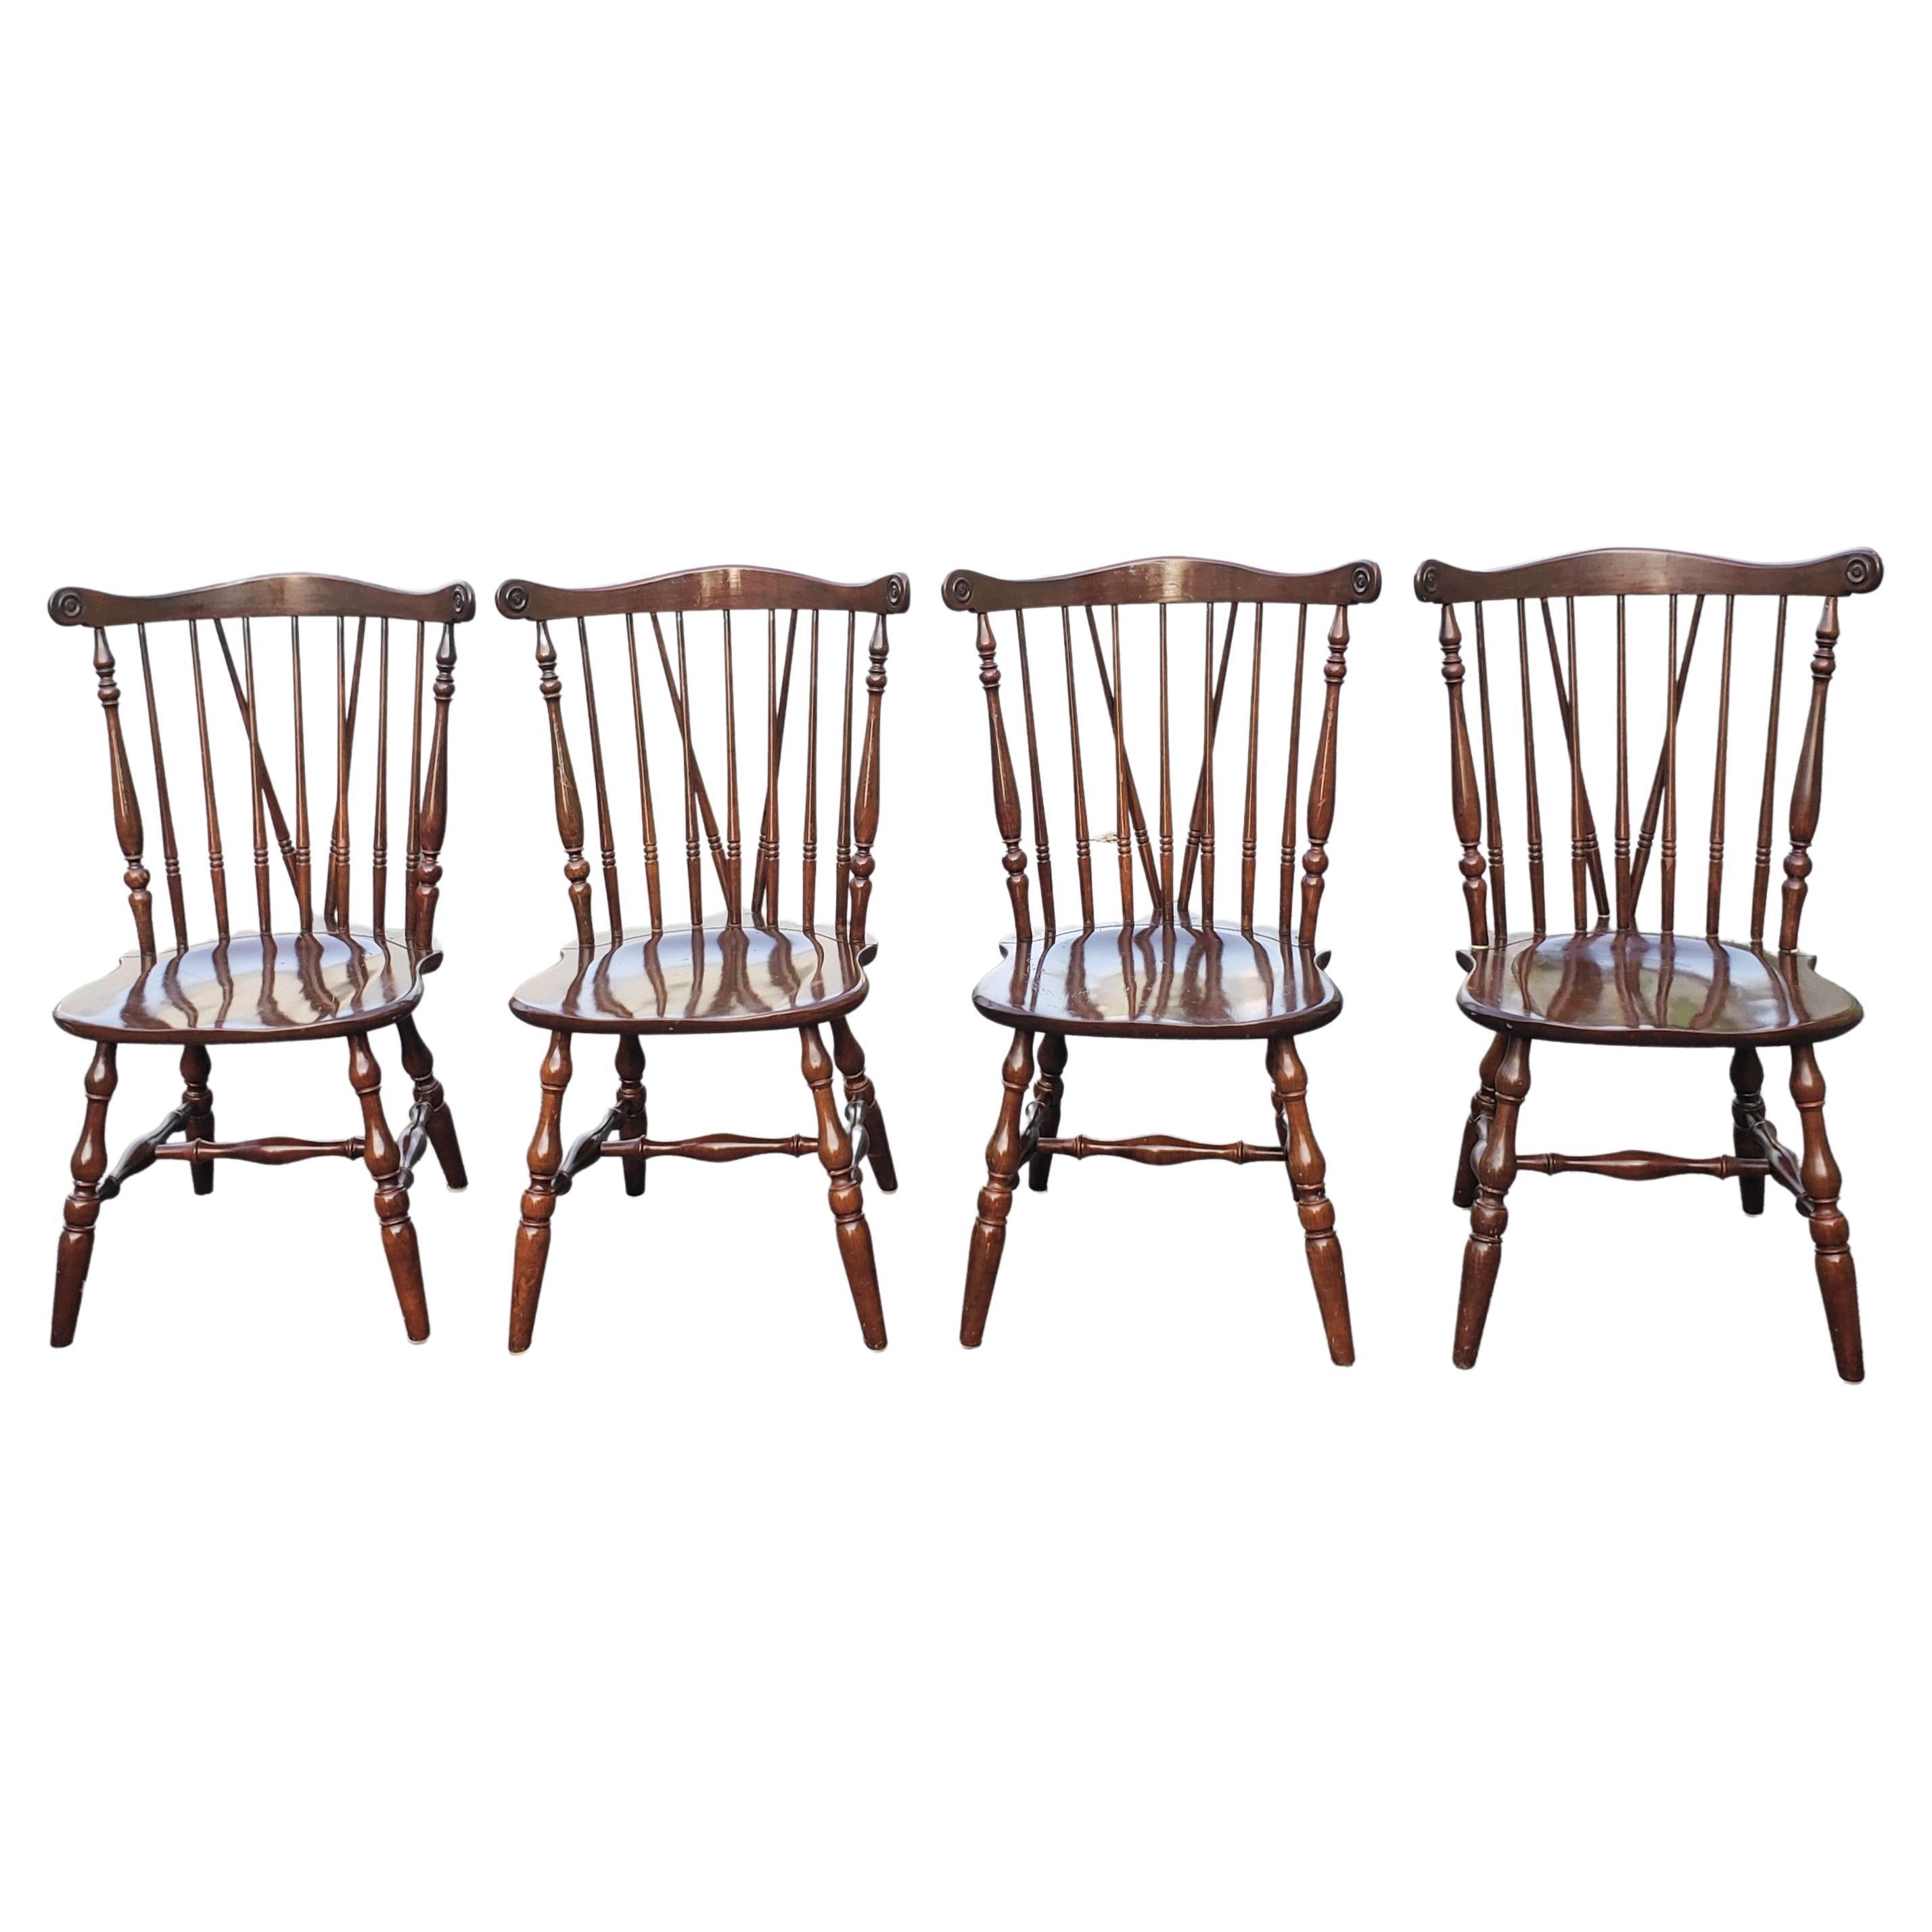 Kling Furniture Cherry Mahogany Fiddleback Brace Back Windsor Chairs, C. 1940s